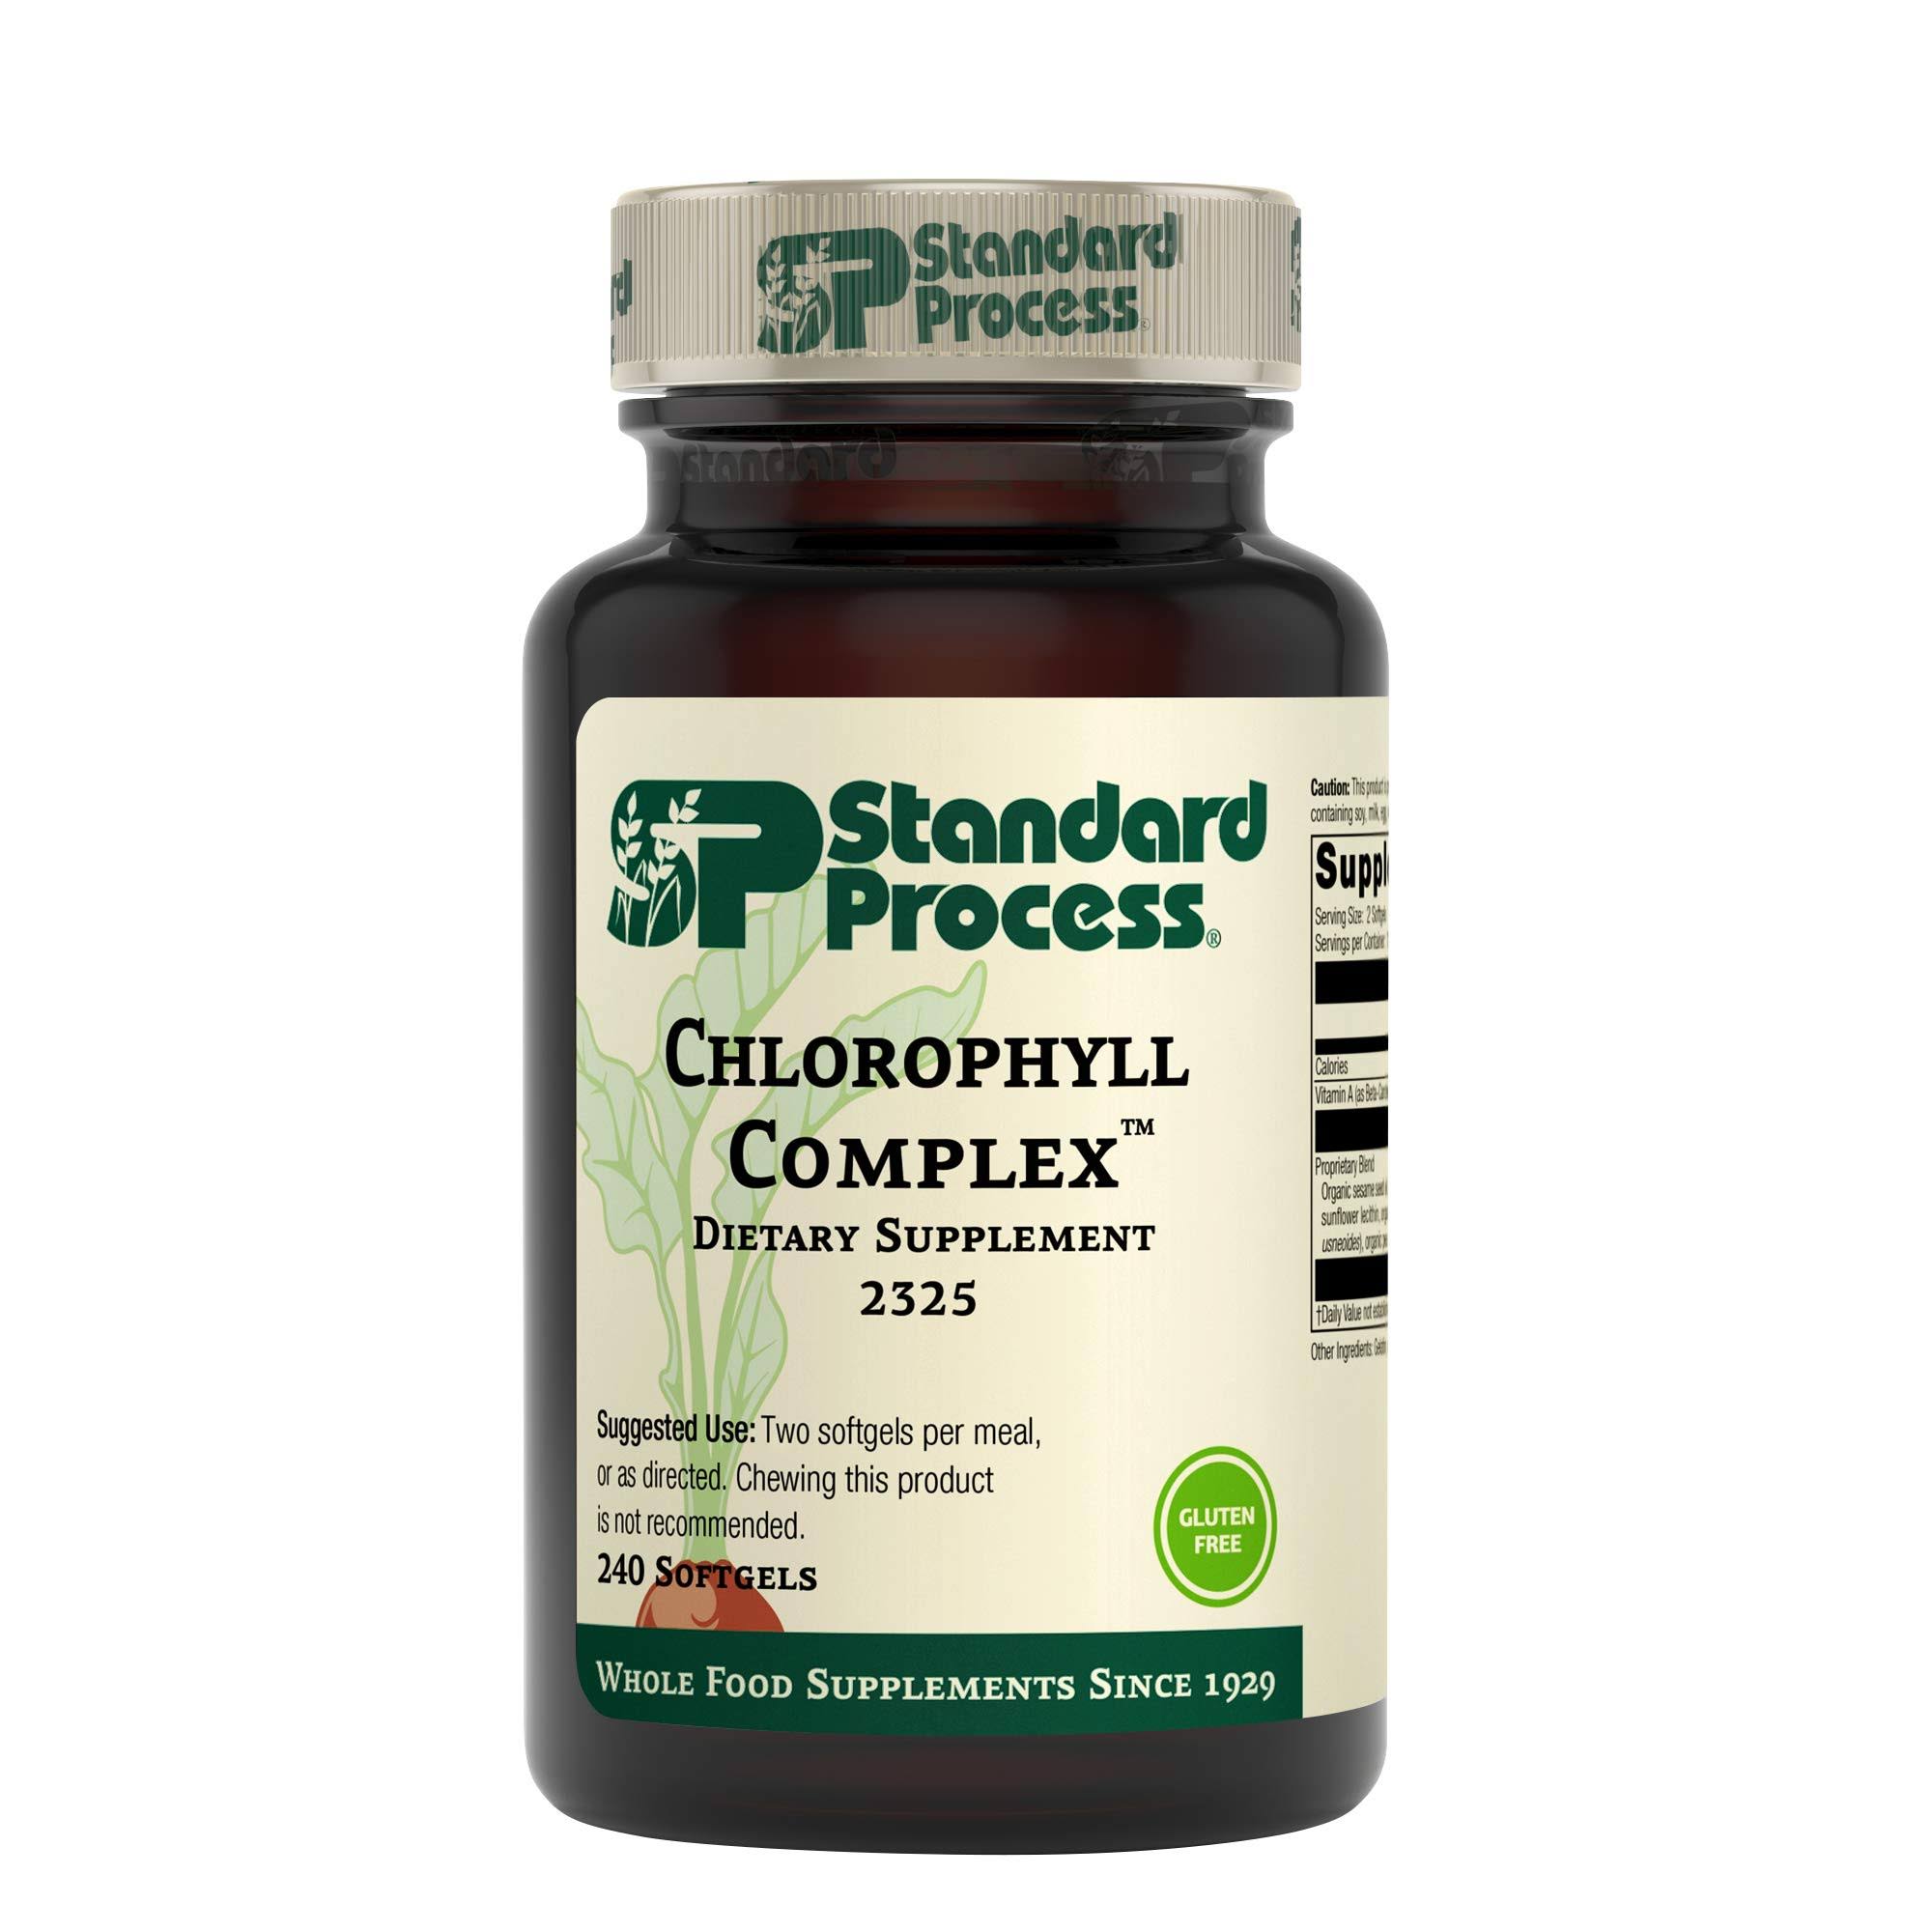 Standard Process Chlorophyll Complex - Immune Support, Antioxidant